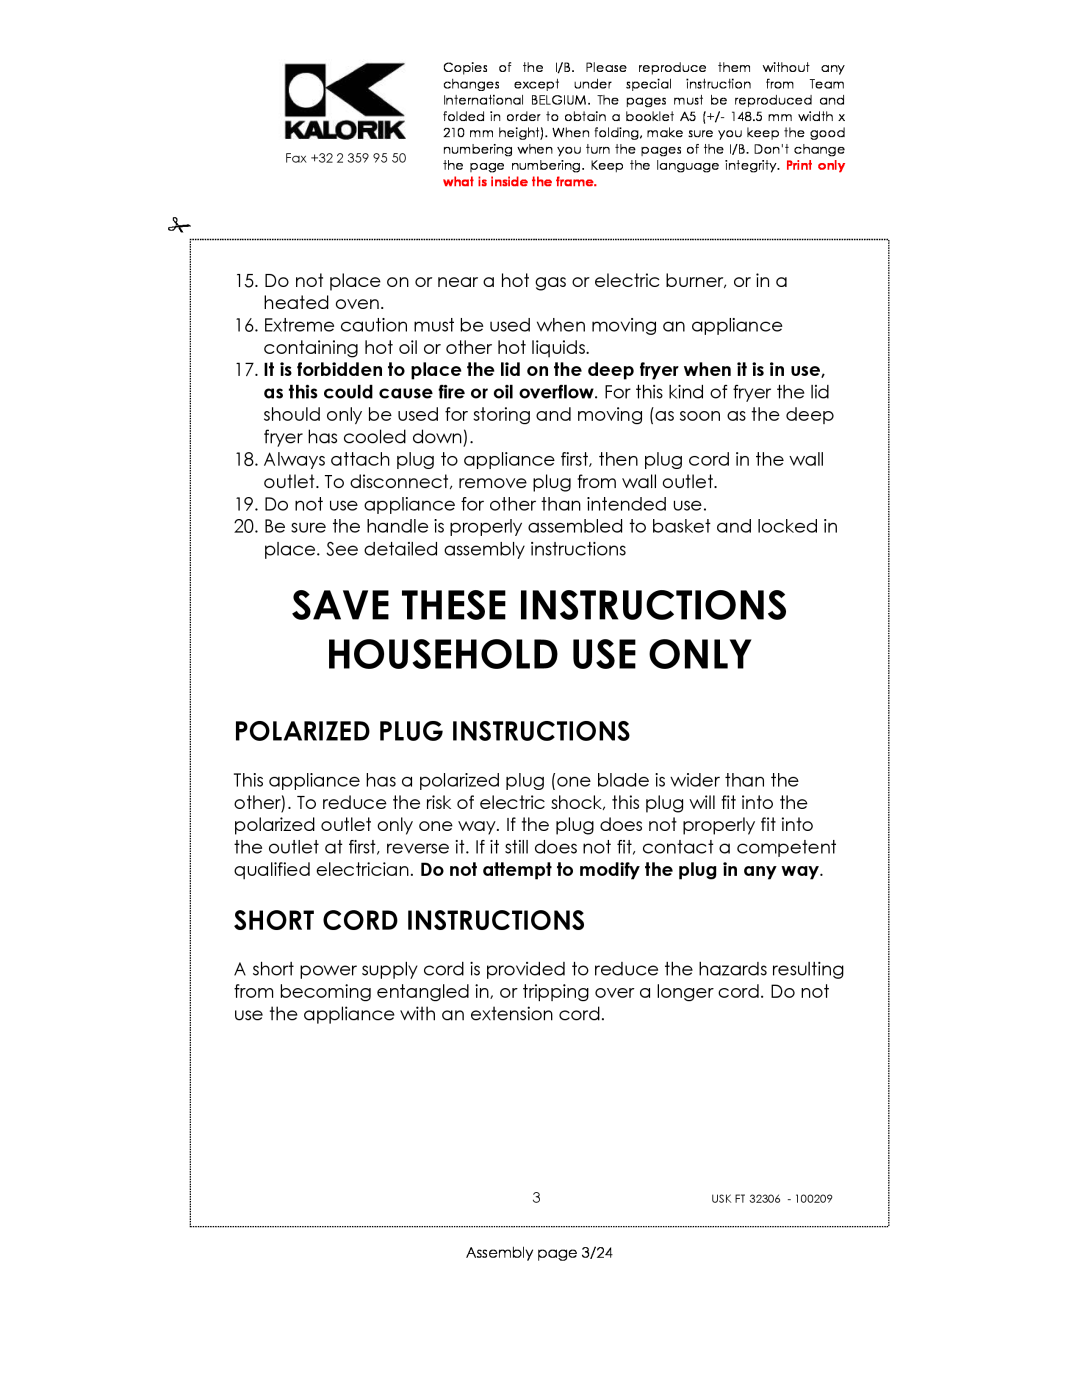 Kalorik USK FT 32306 Save These Instructions Household Use Only, Polarized Plug Instructions, Short Cord Instructions 